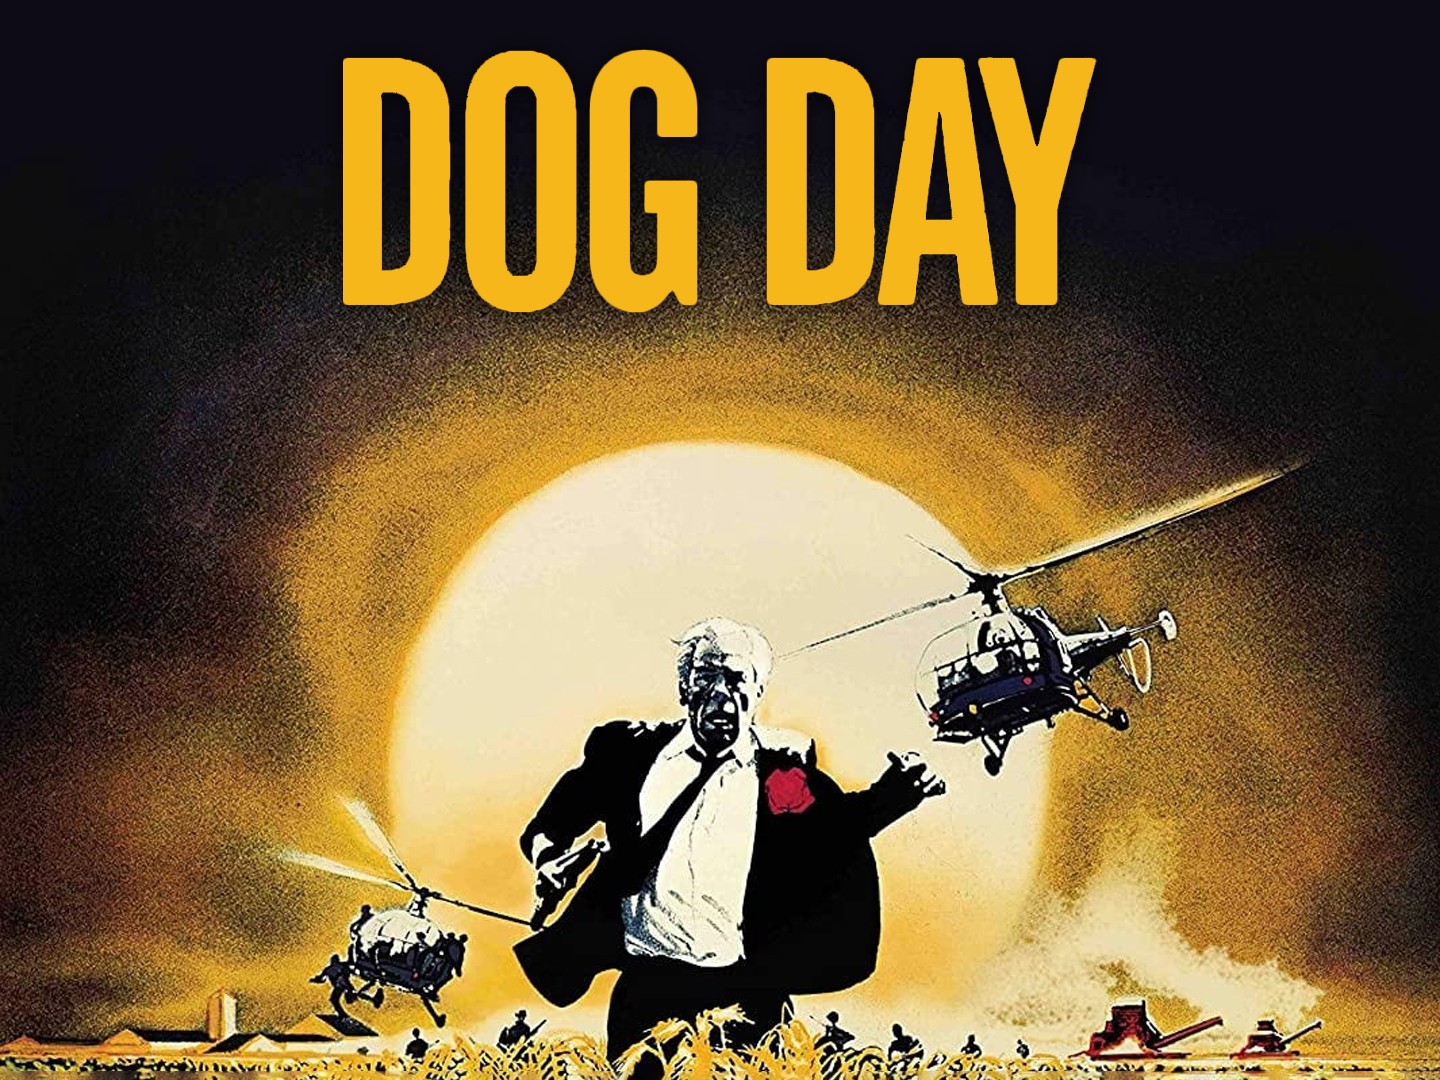 Dog Days - Rotten Tomatoes